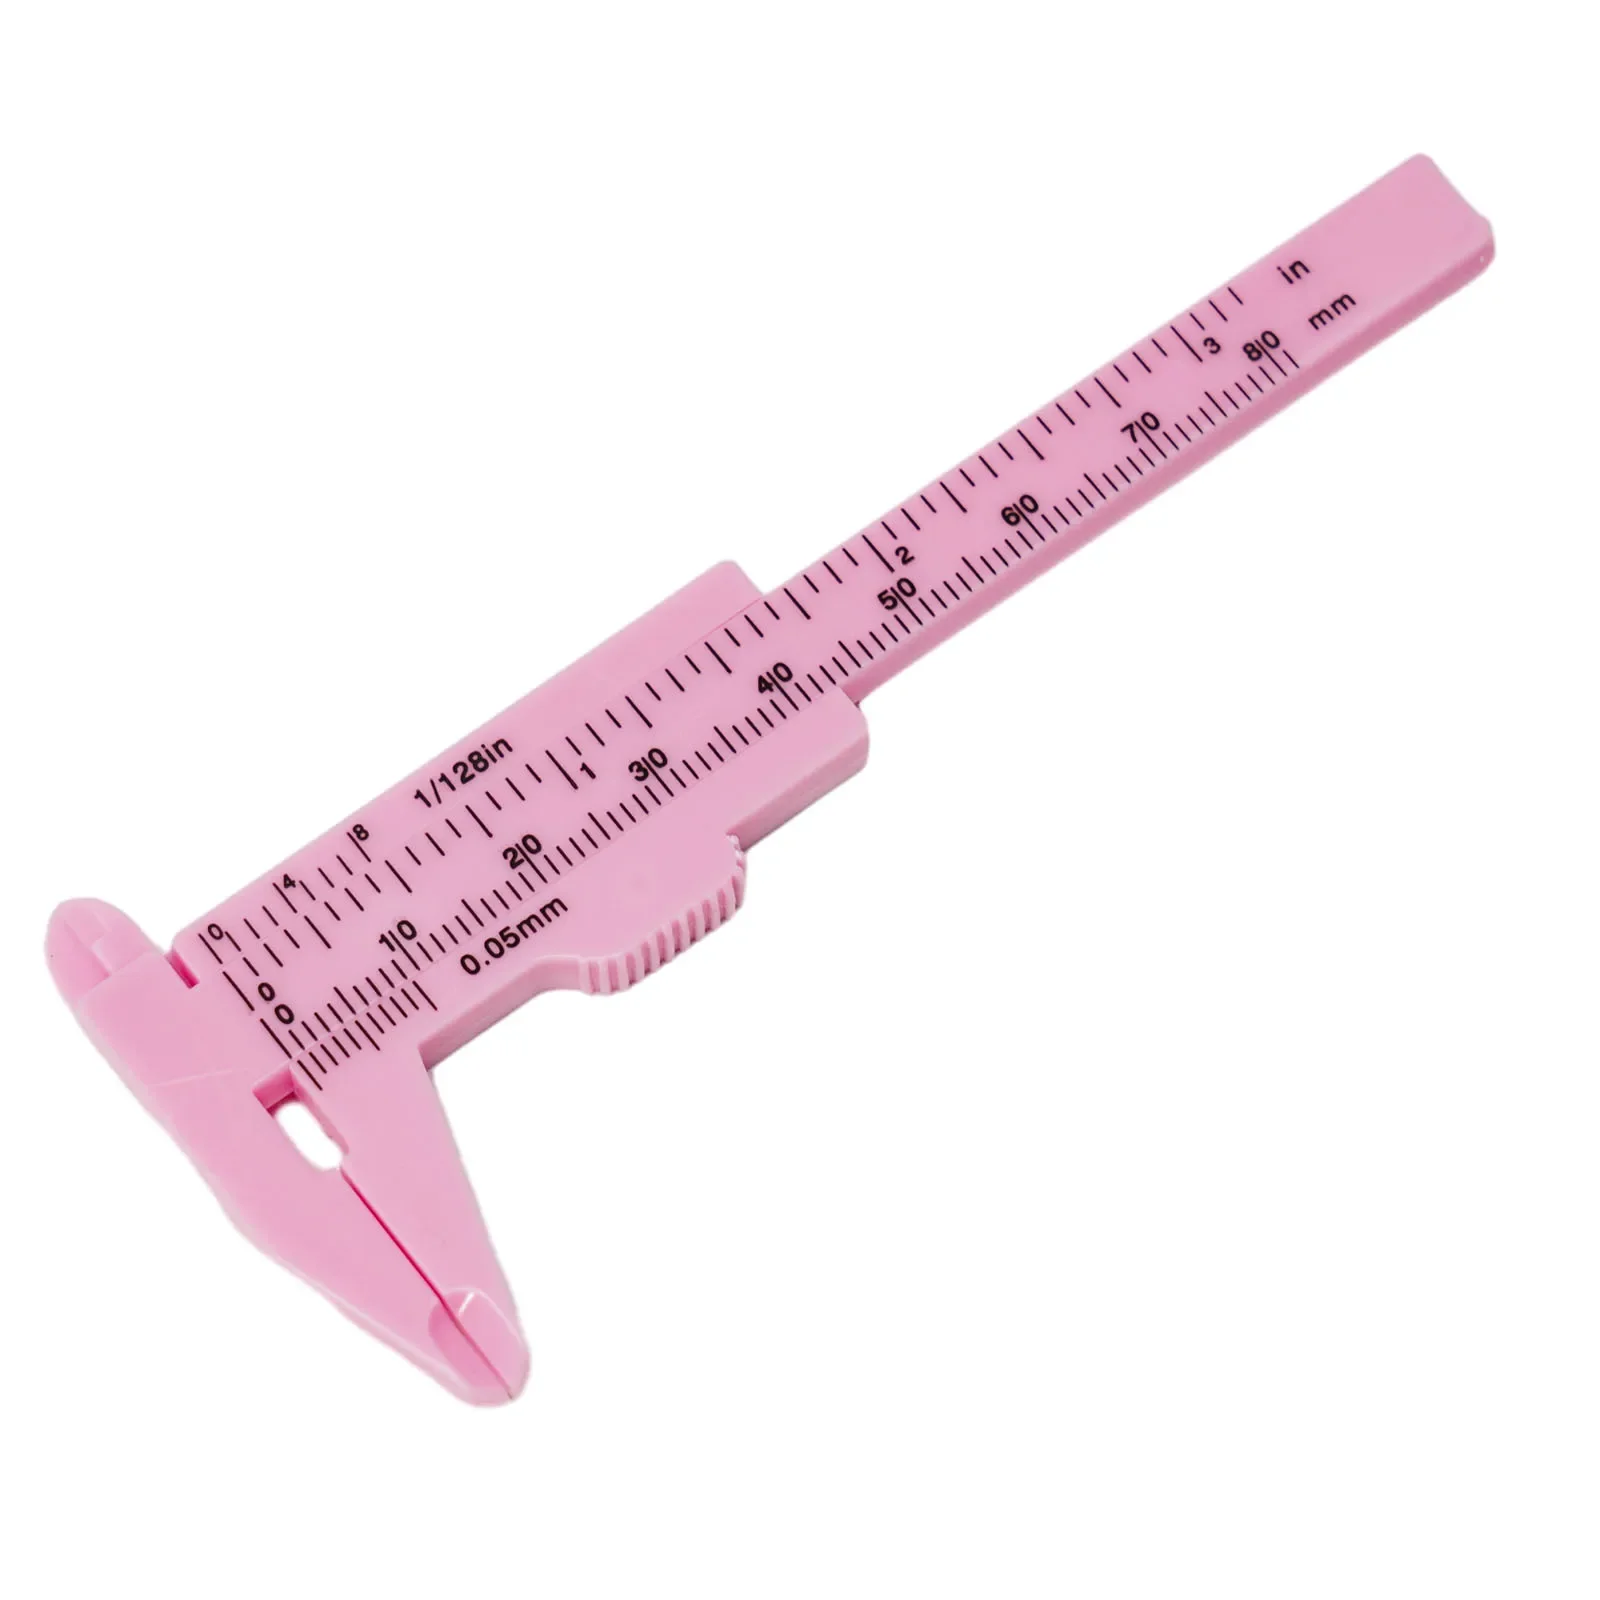 

0-80mm Plastic Sliding Vernier Caliper 80mm Vernier Caliper Aperture Depth Diameter Gauge Double Scale Ruler Measure Part Tool